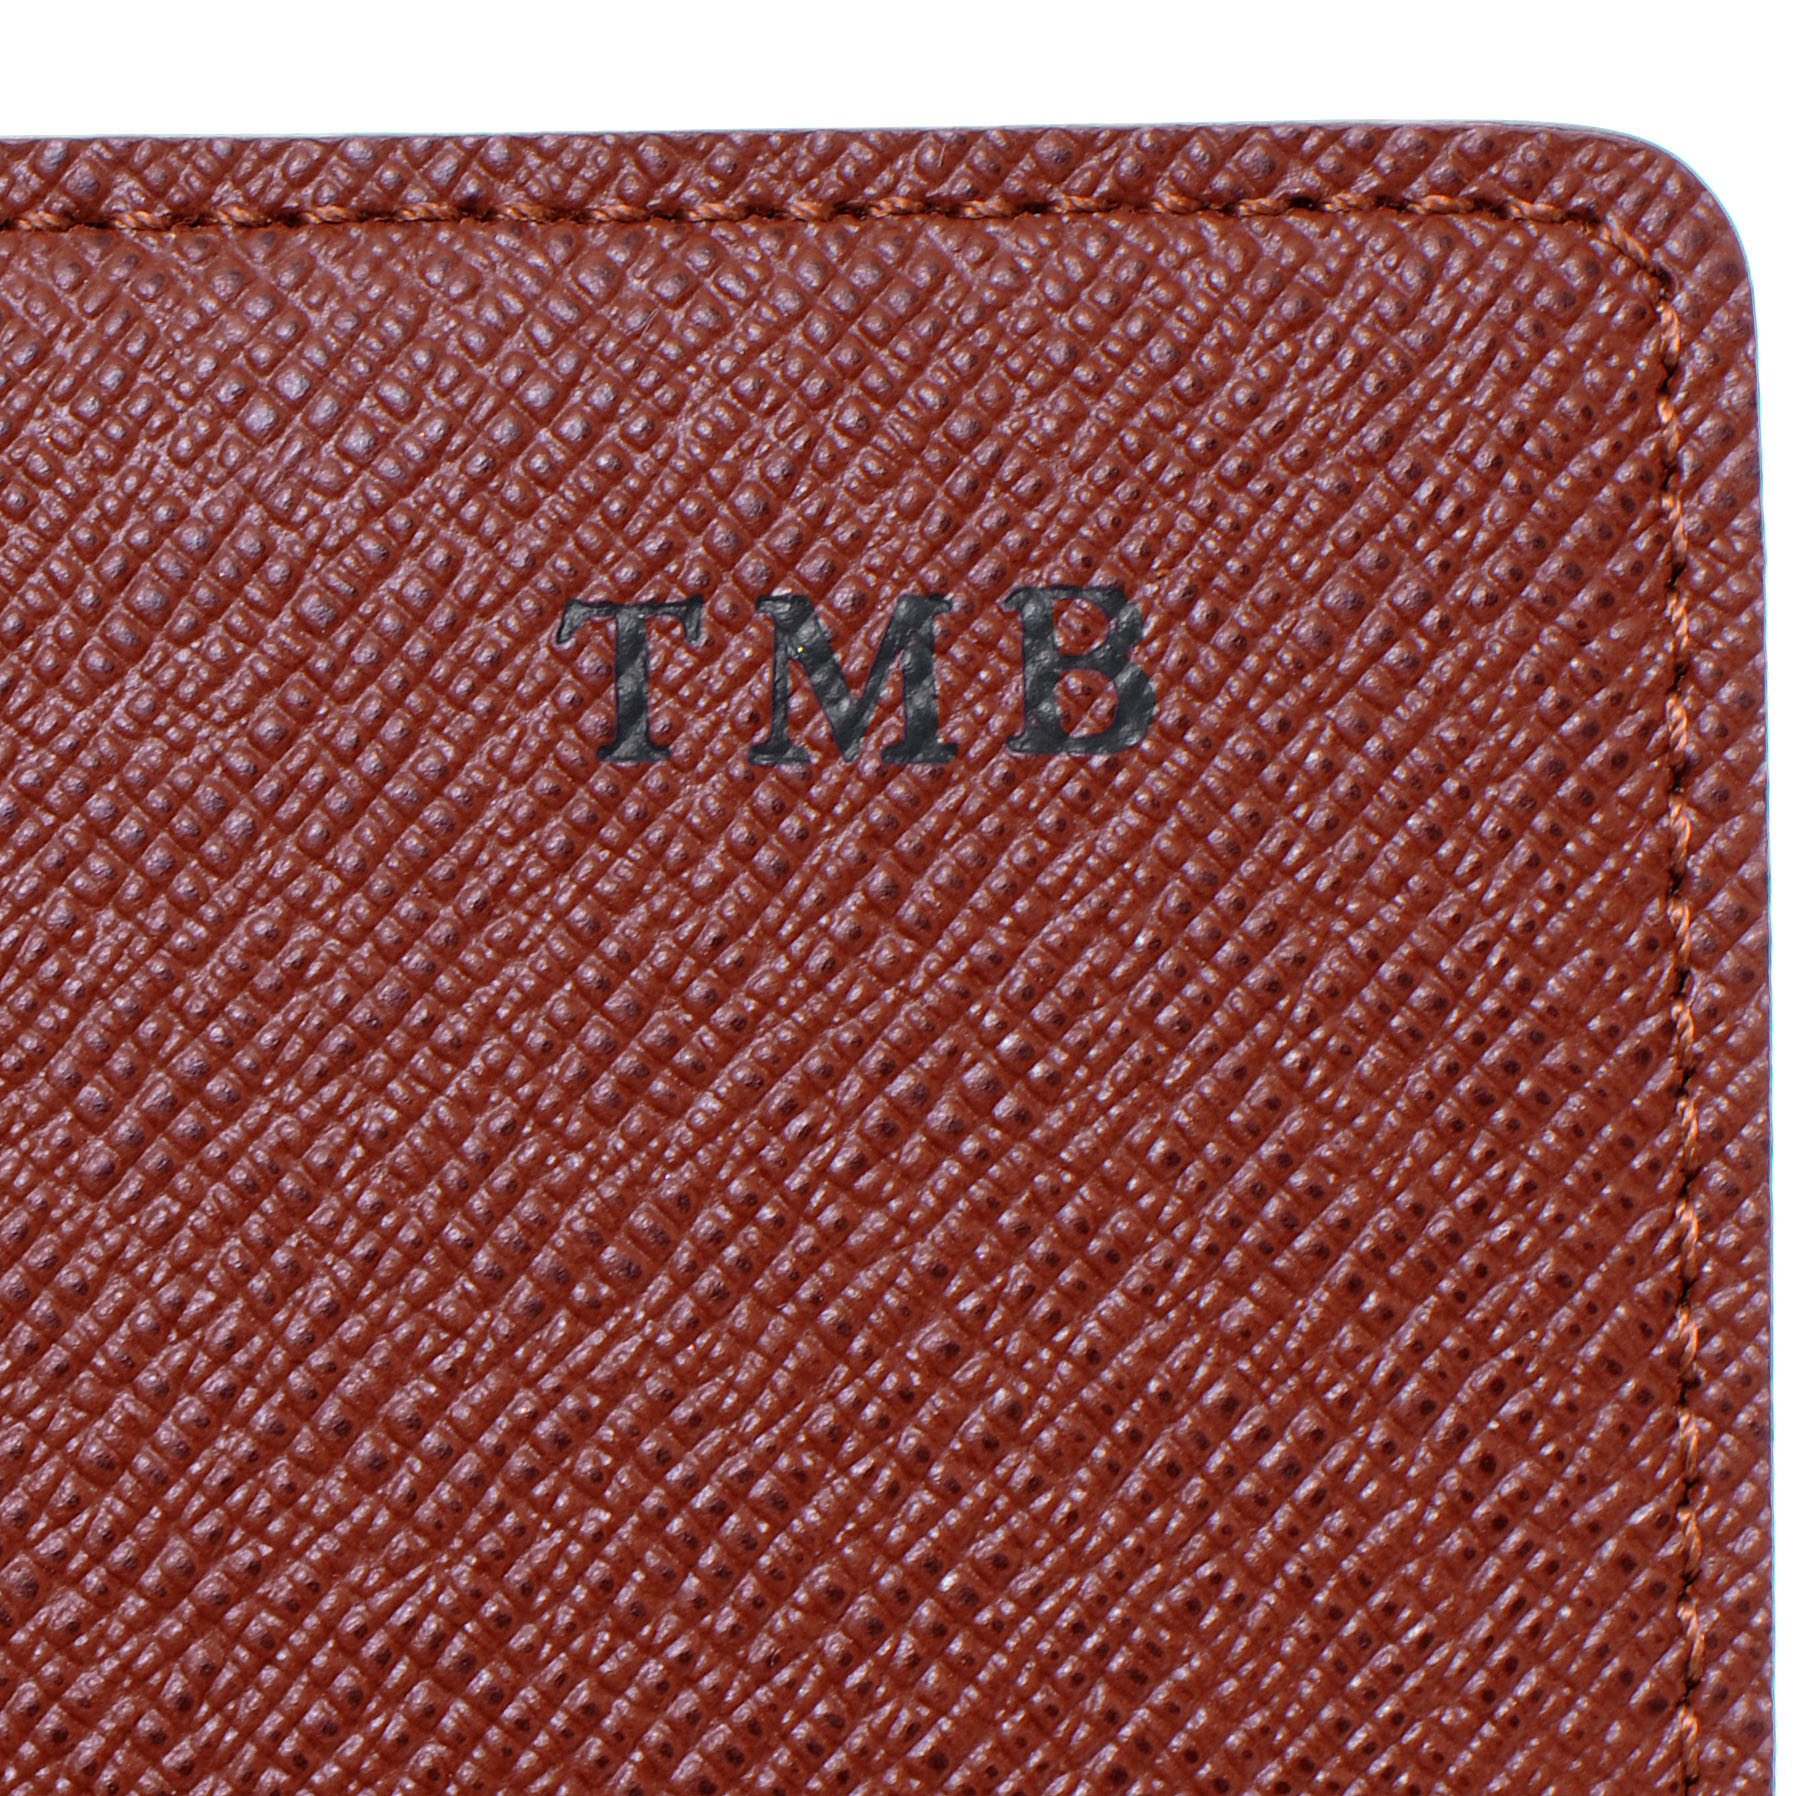 LOUIS VUITTON Monogram Simple Checkbook Holder Wallet Cover 48994